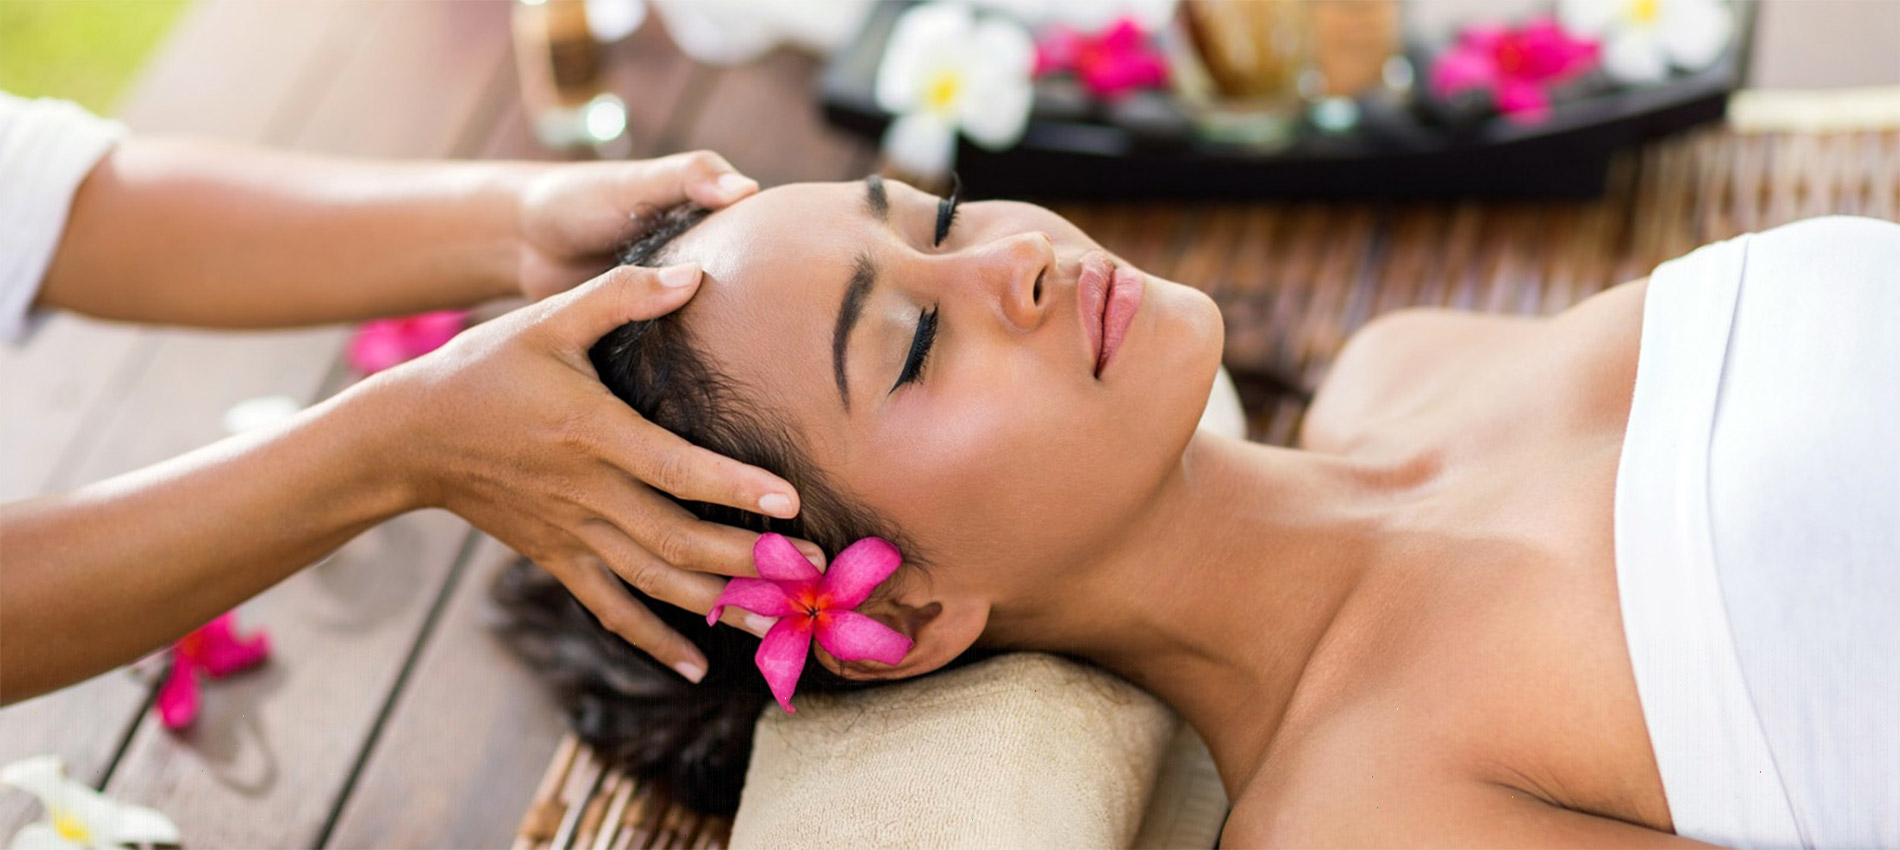 carla callaway add photo massage parlour full service